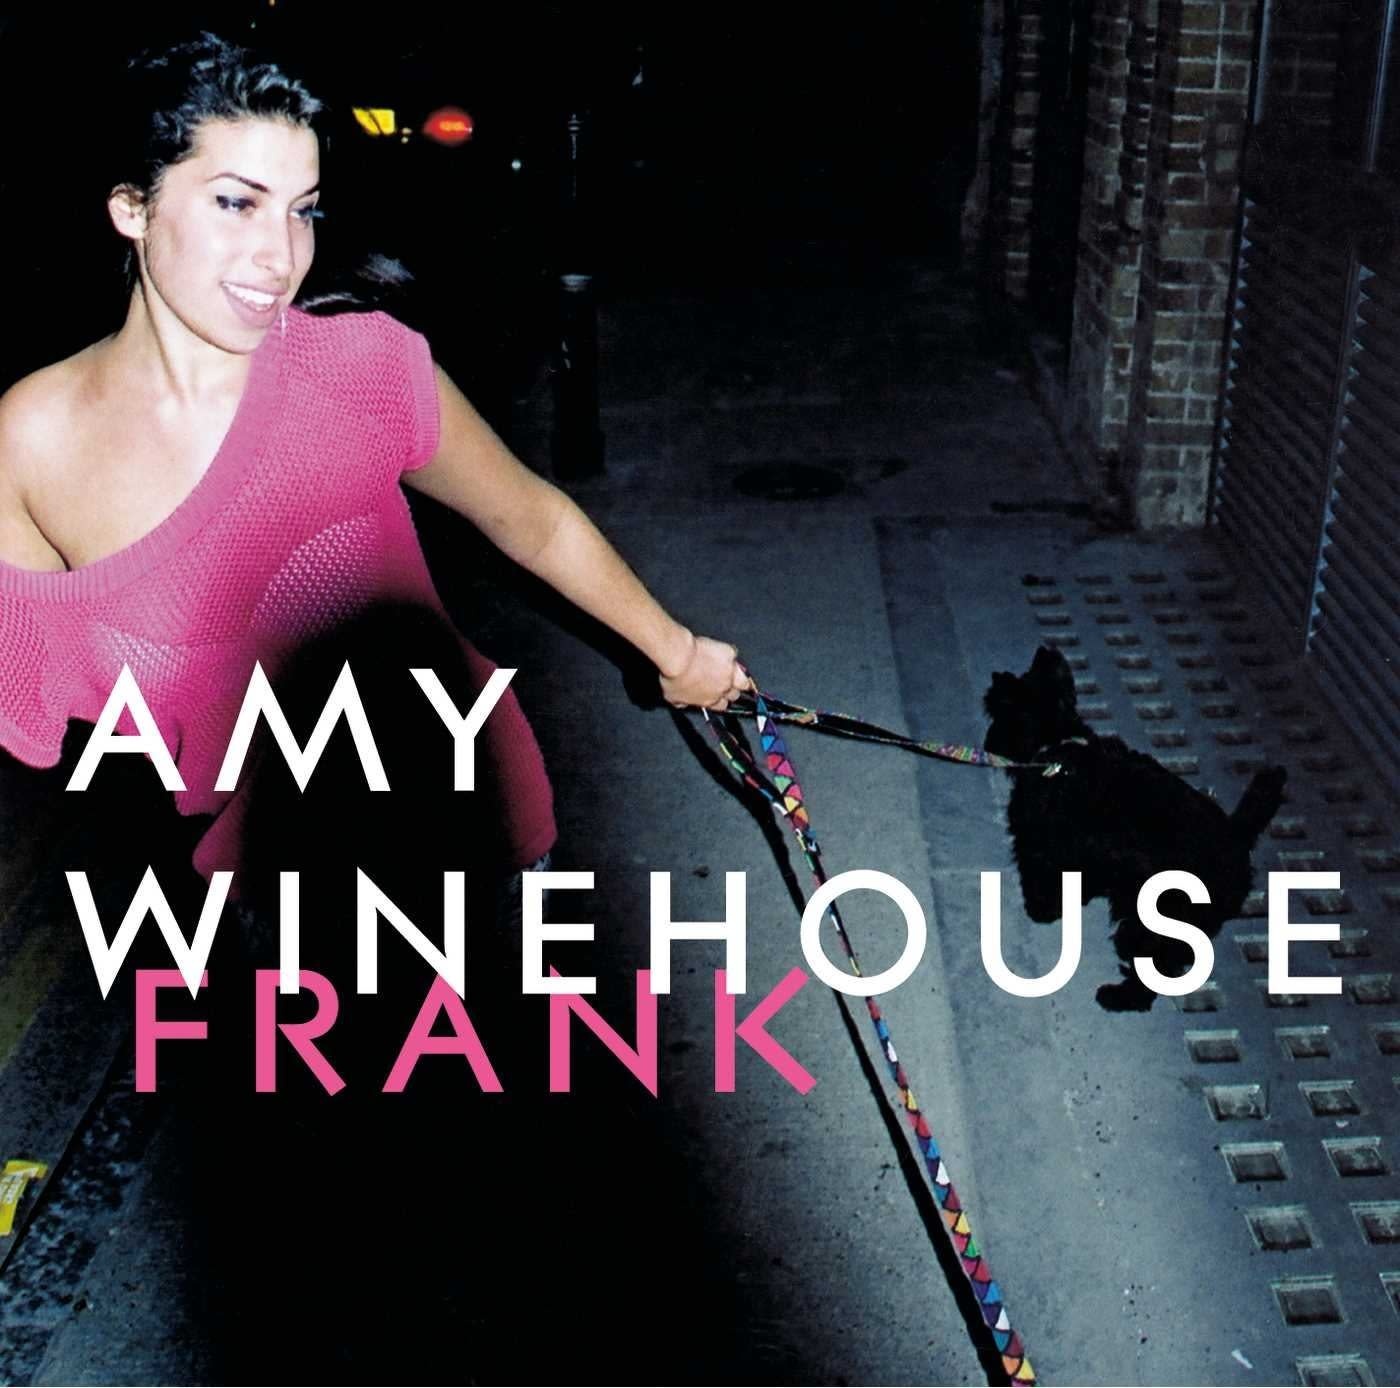 Universal Amy Winehouse - Frank